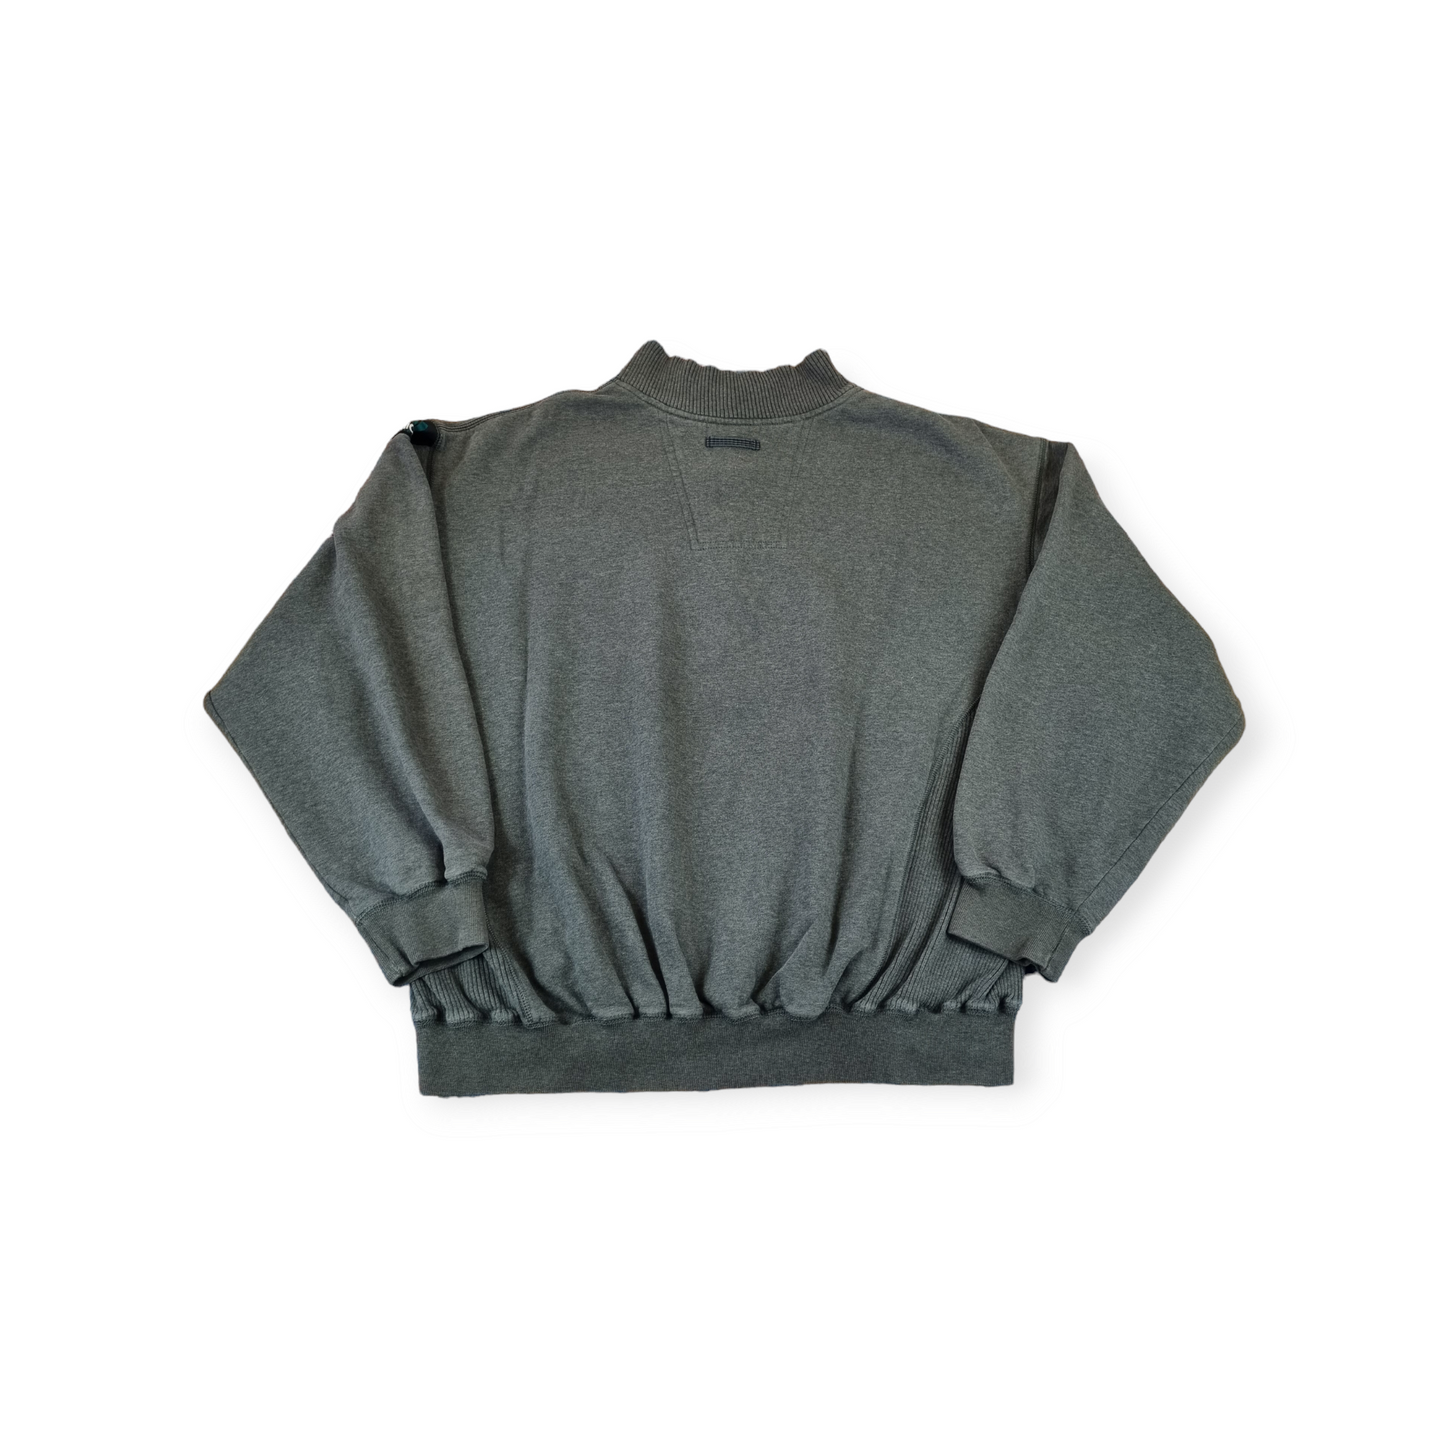 Vintage Adidas Equipment Sweatshirt (XL - 2XL)